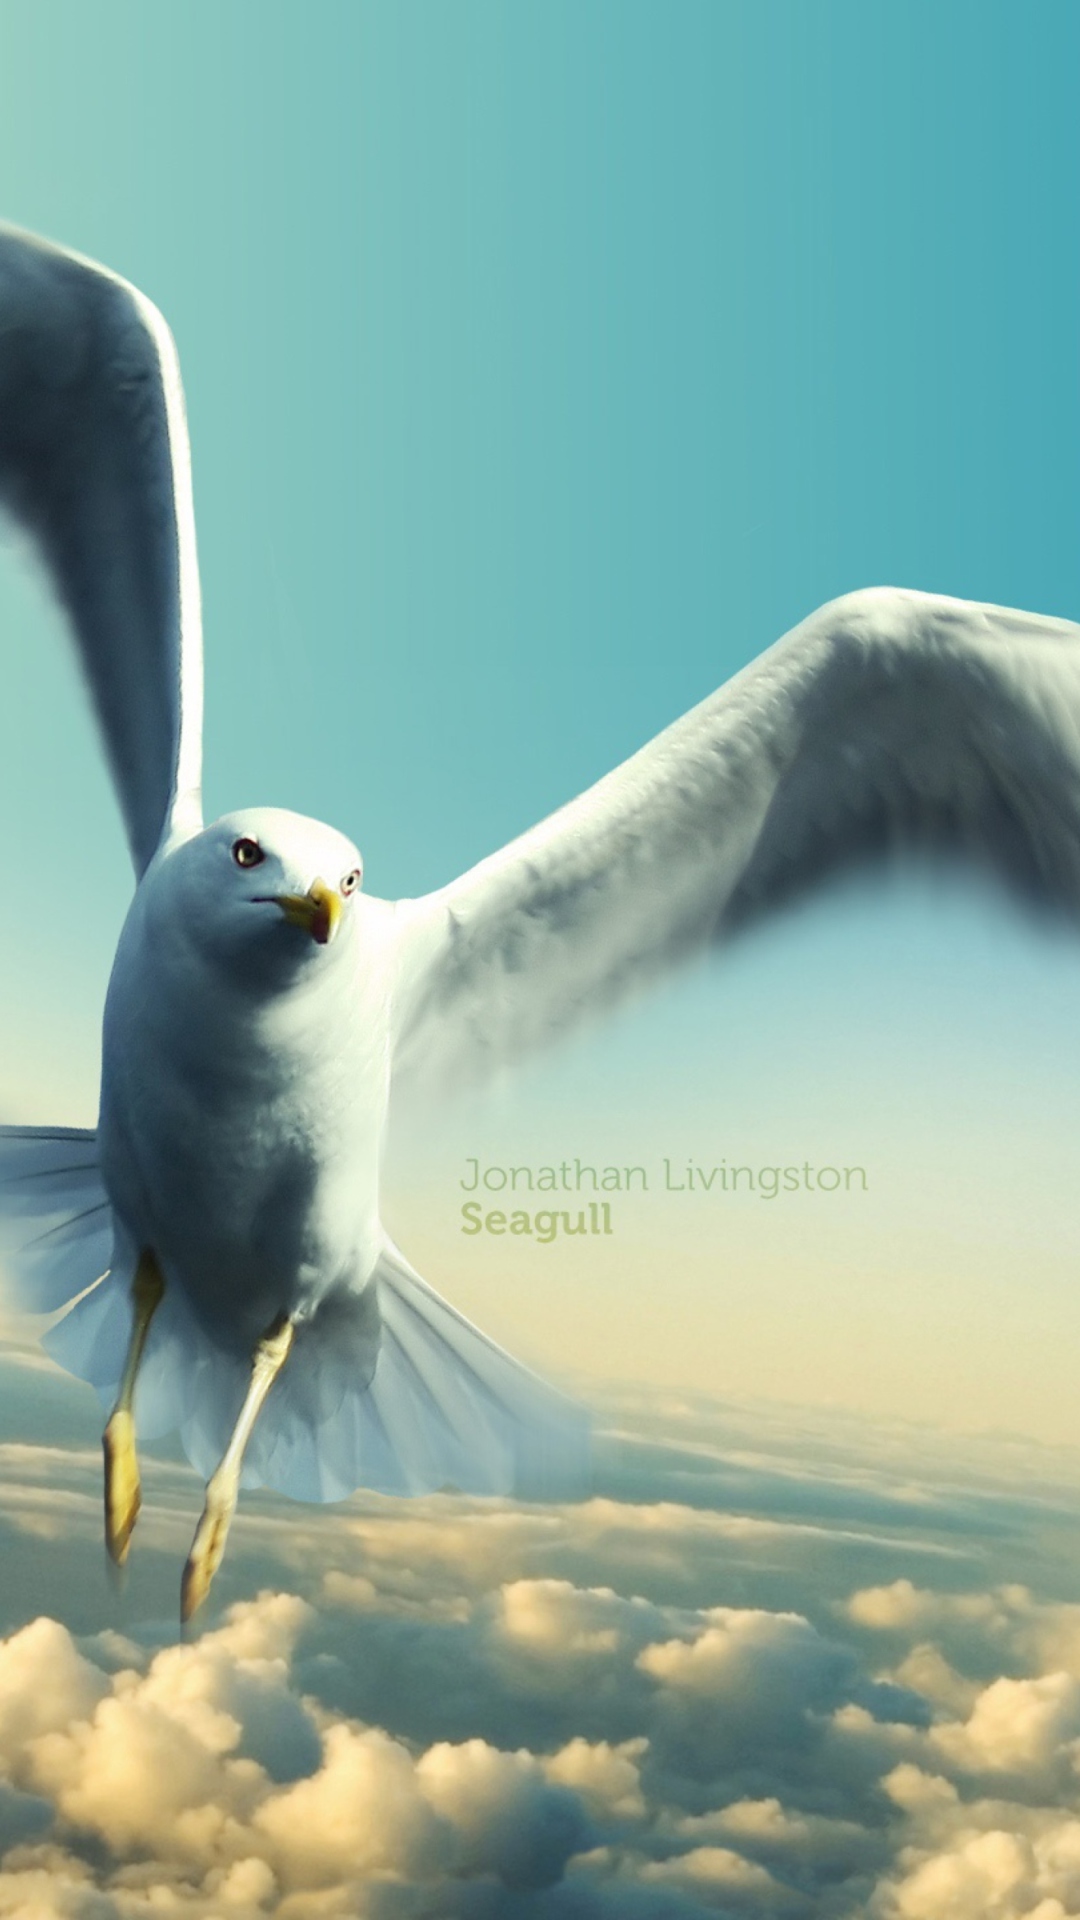 Jonathan Livingston Seagull wallpaper 1080x1920